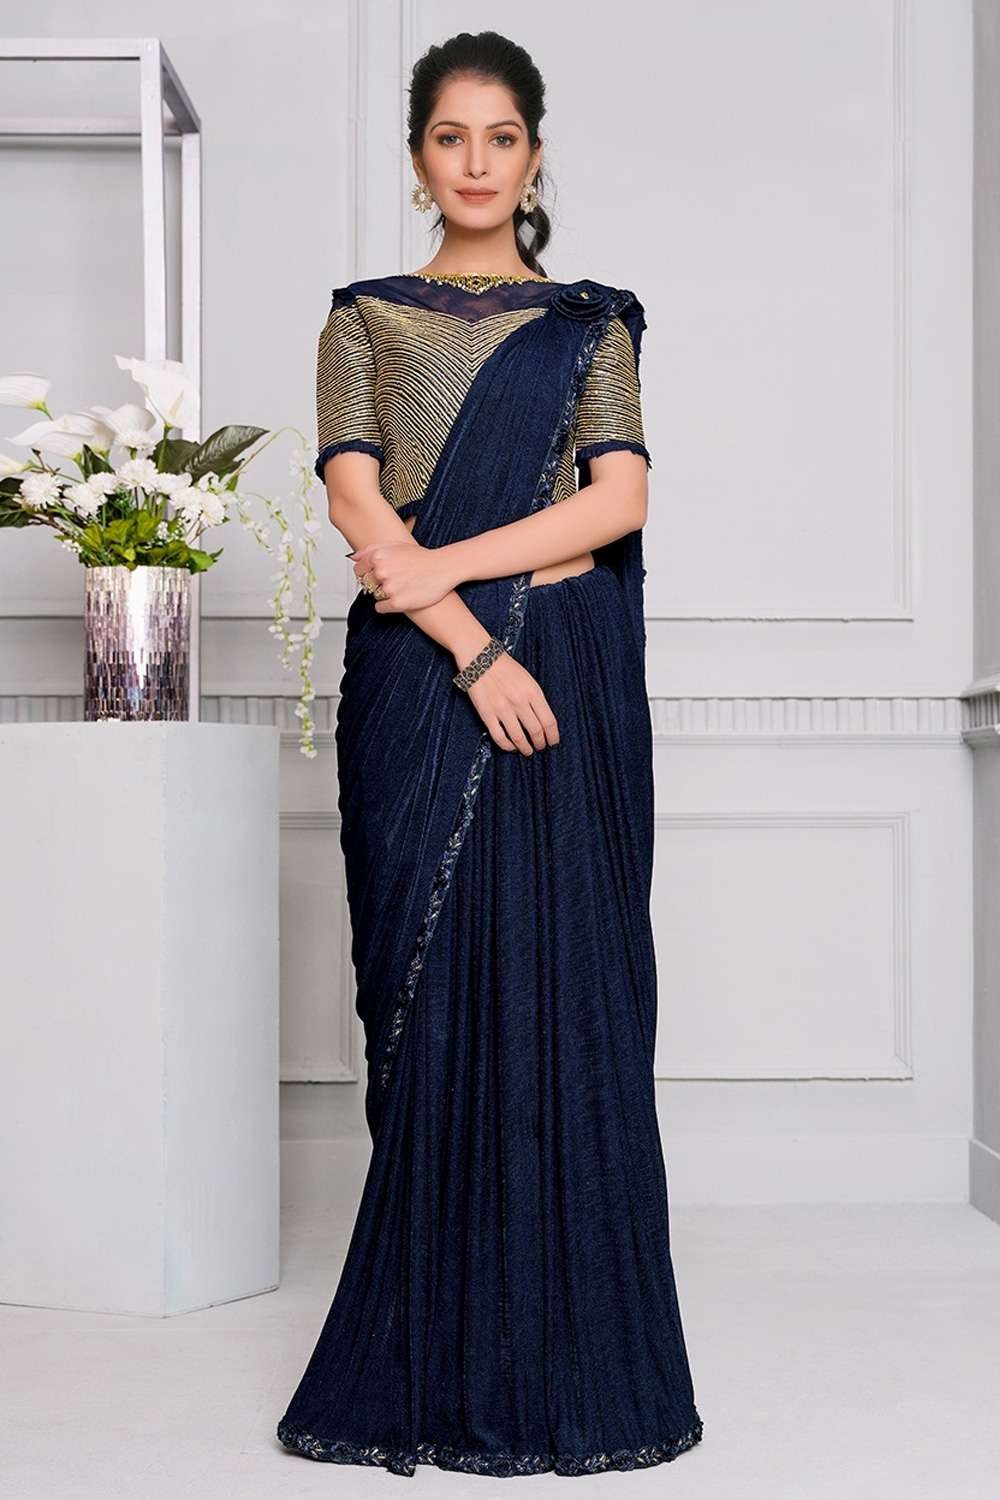 How to wear saree like Bollywood stars; 7 stylish ways to drape the nine  yards | Fashion Trends - Hindustan Times